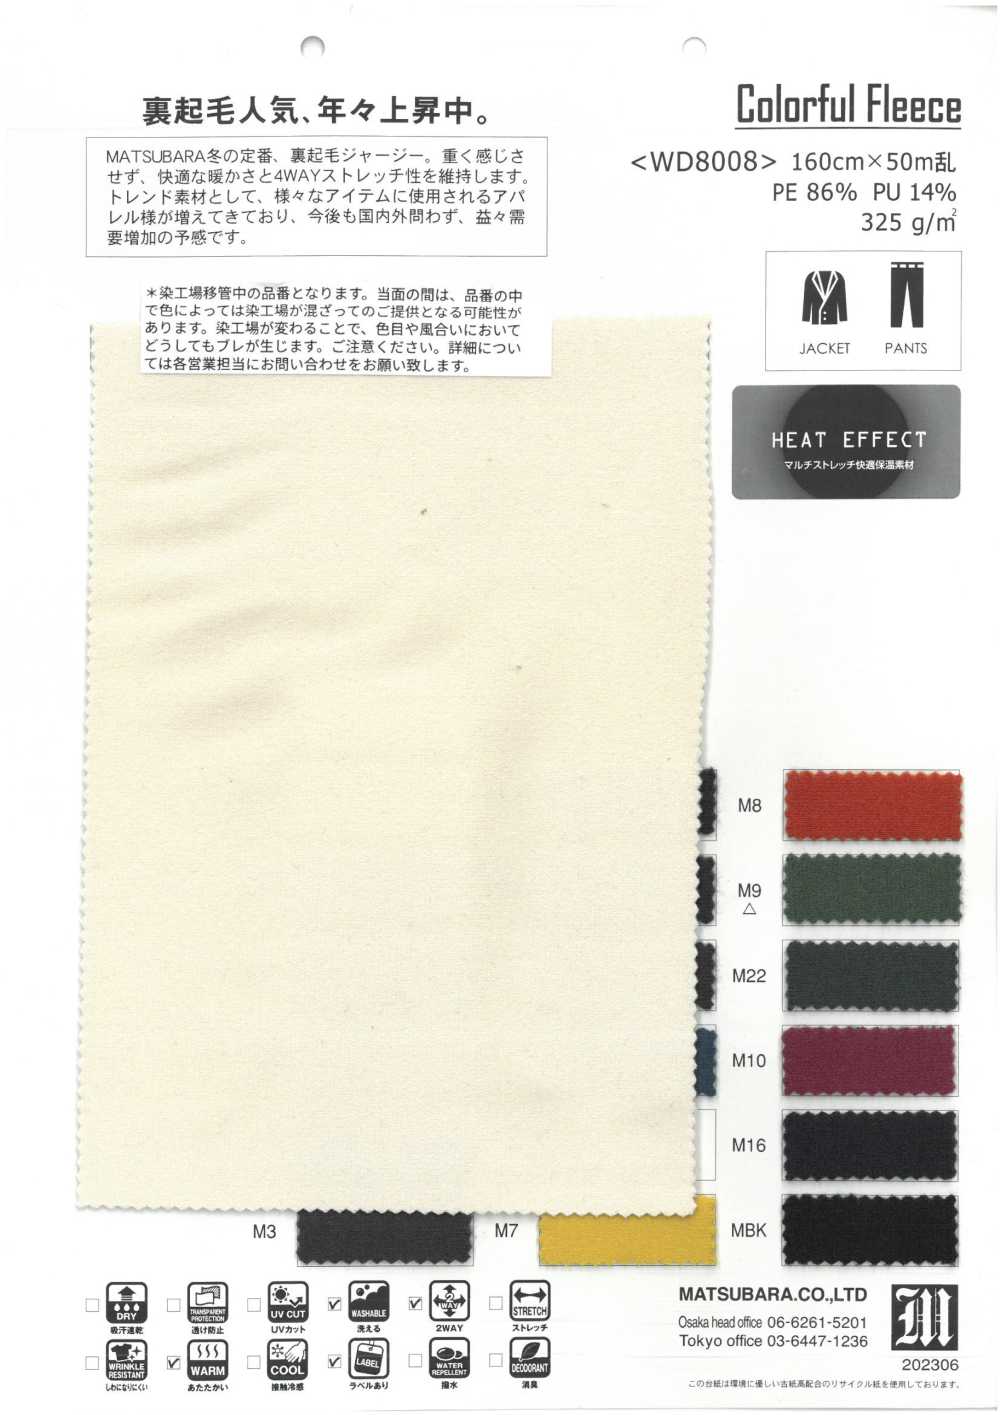 WD8008 Buntes Fleece[Textilgewebe] Matsubara